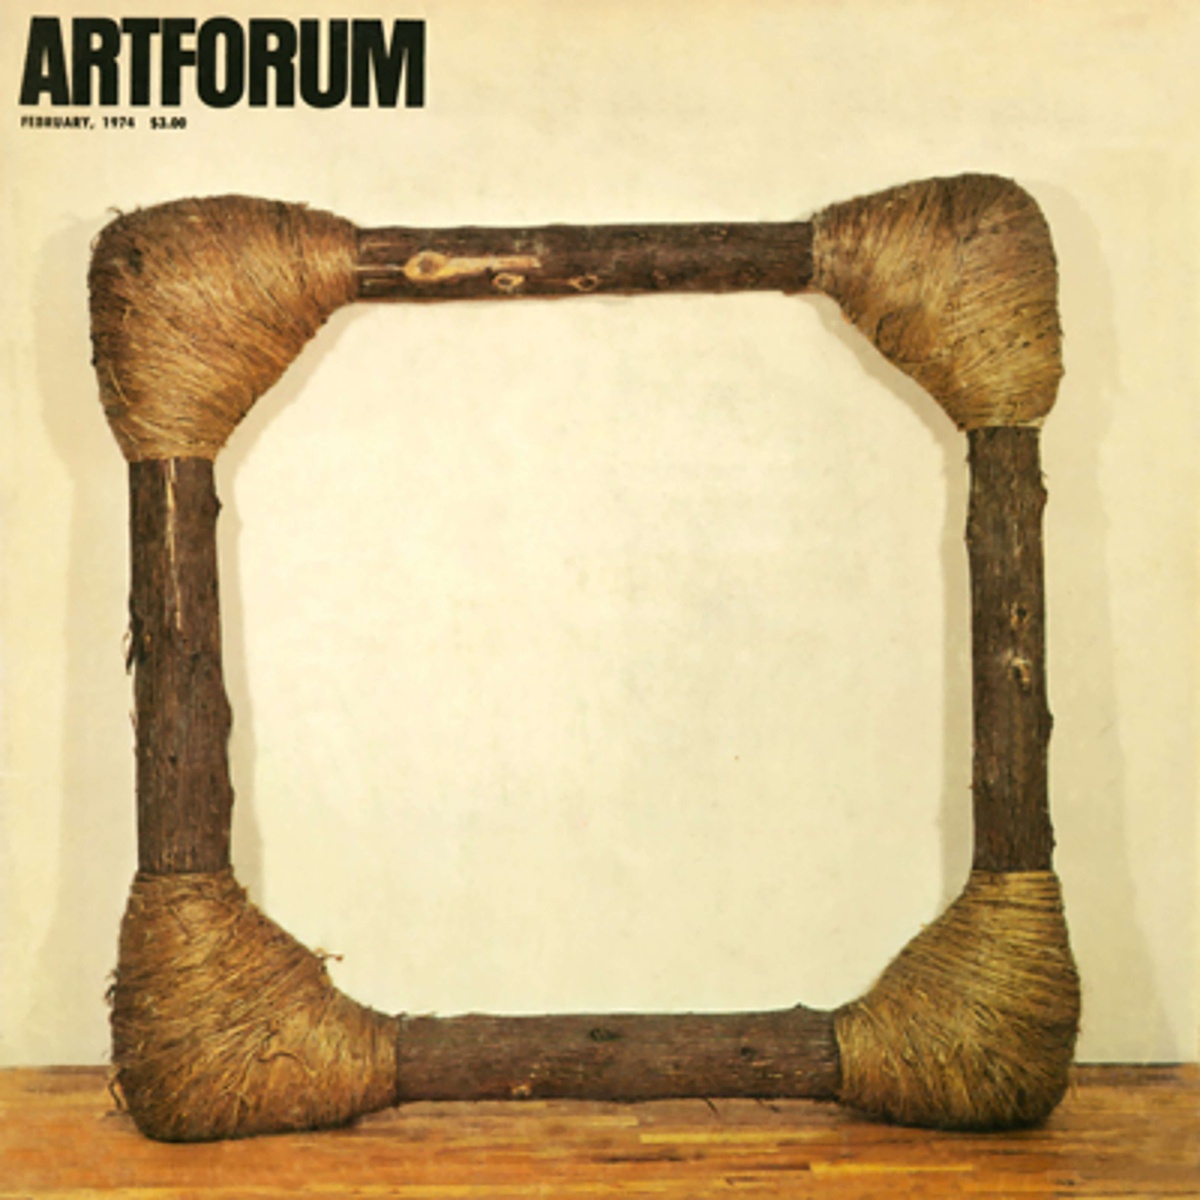 Jackie Winsor's Bound Square on the cover of Artforum magazine